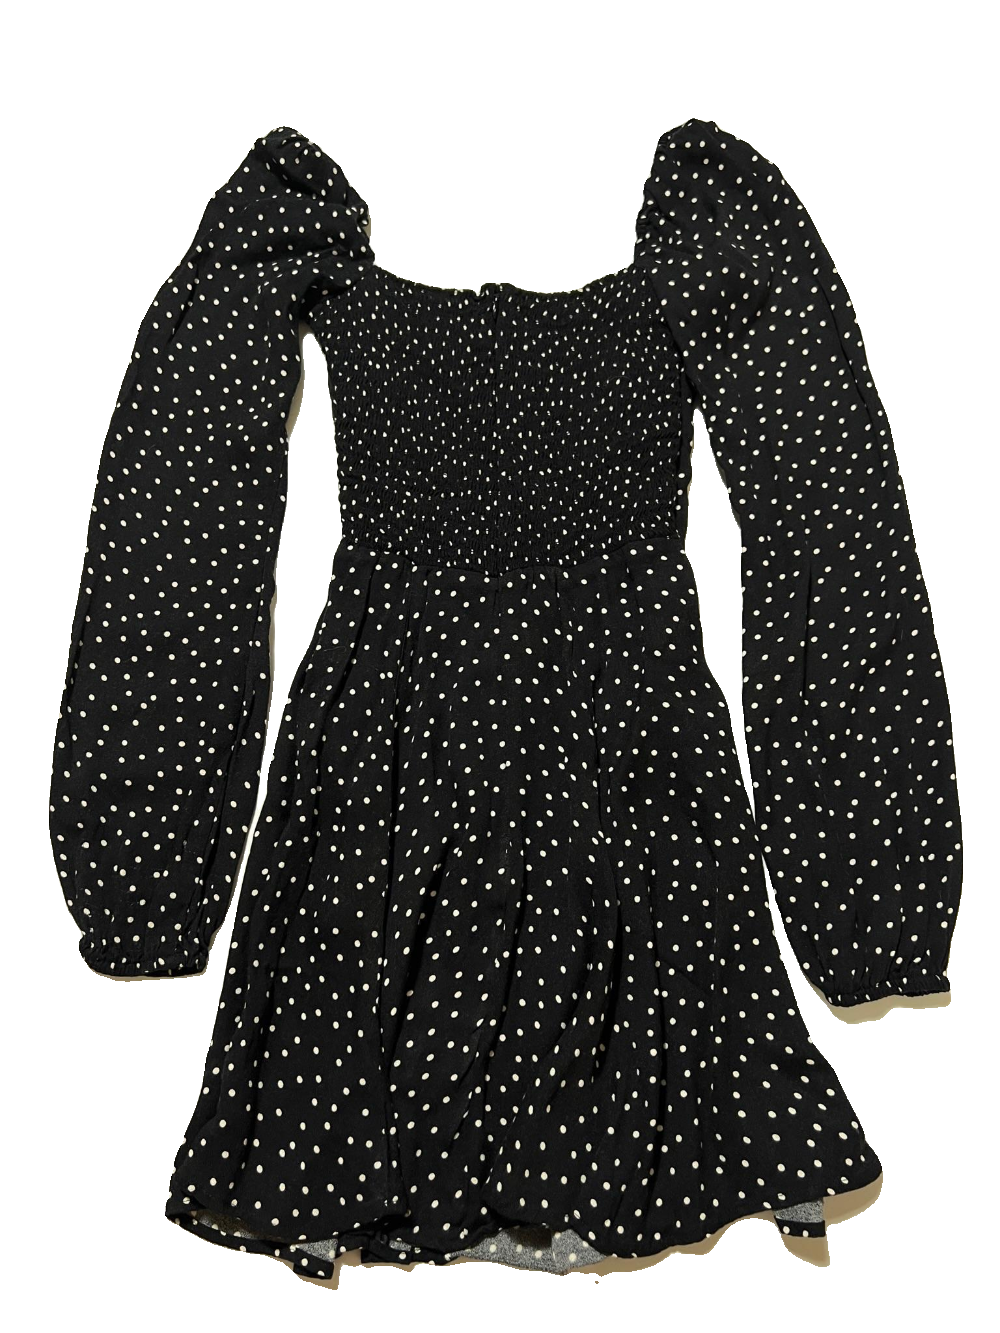 Reformation- Black Polka Dot Long Sleeve Mini Dress